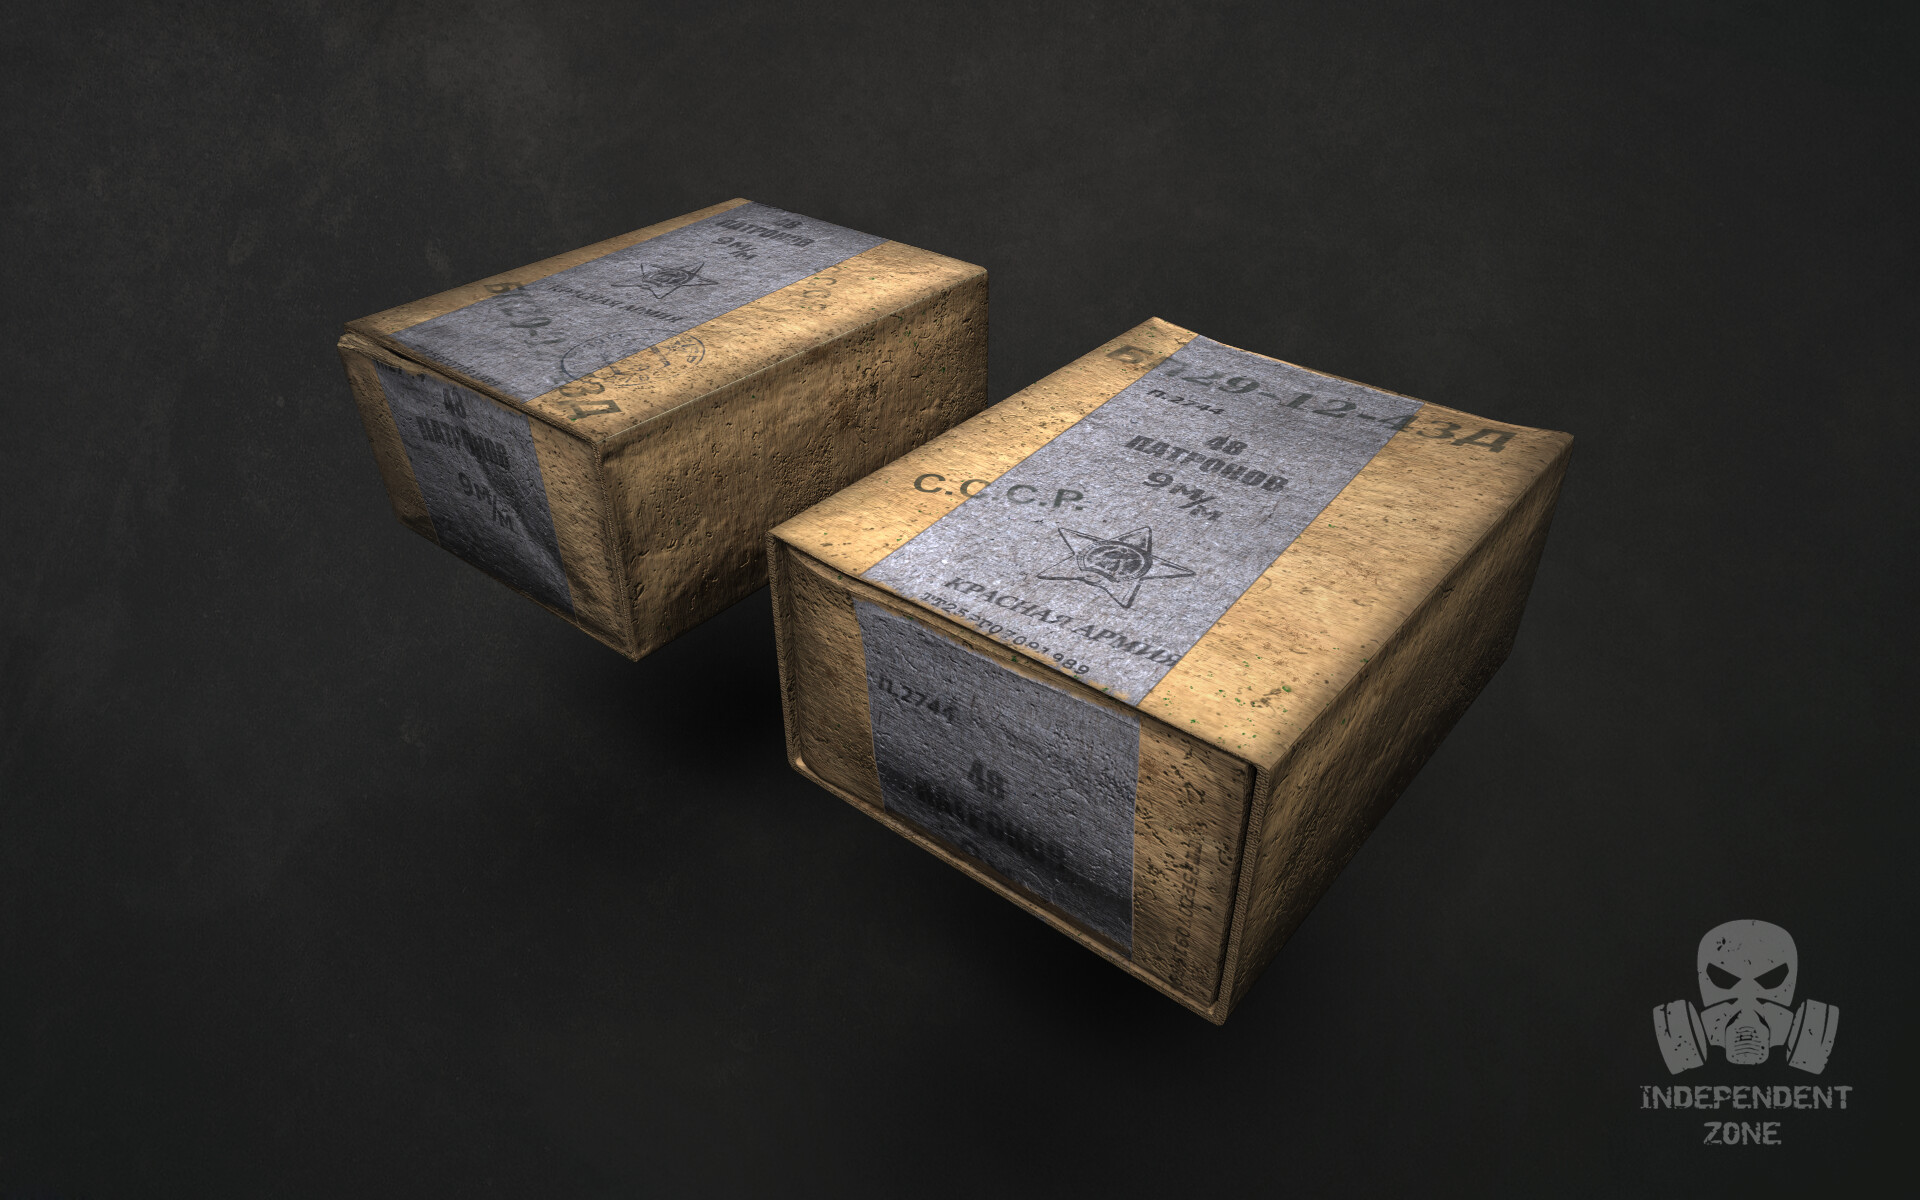 ArtStation - Ammo boxes